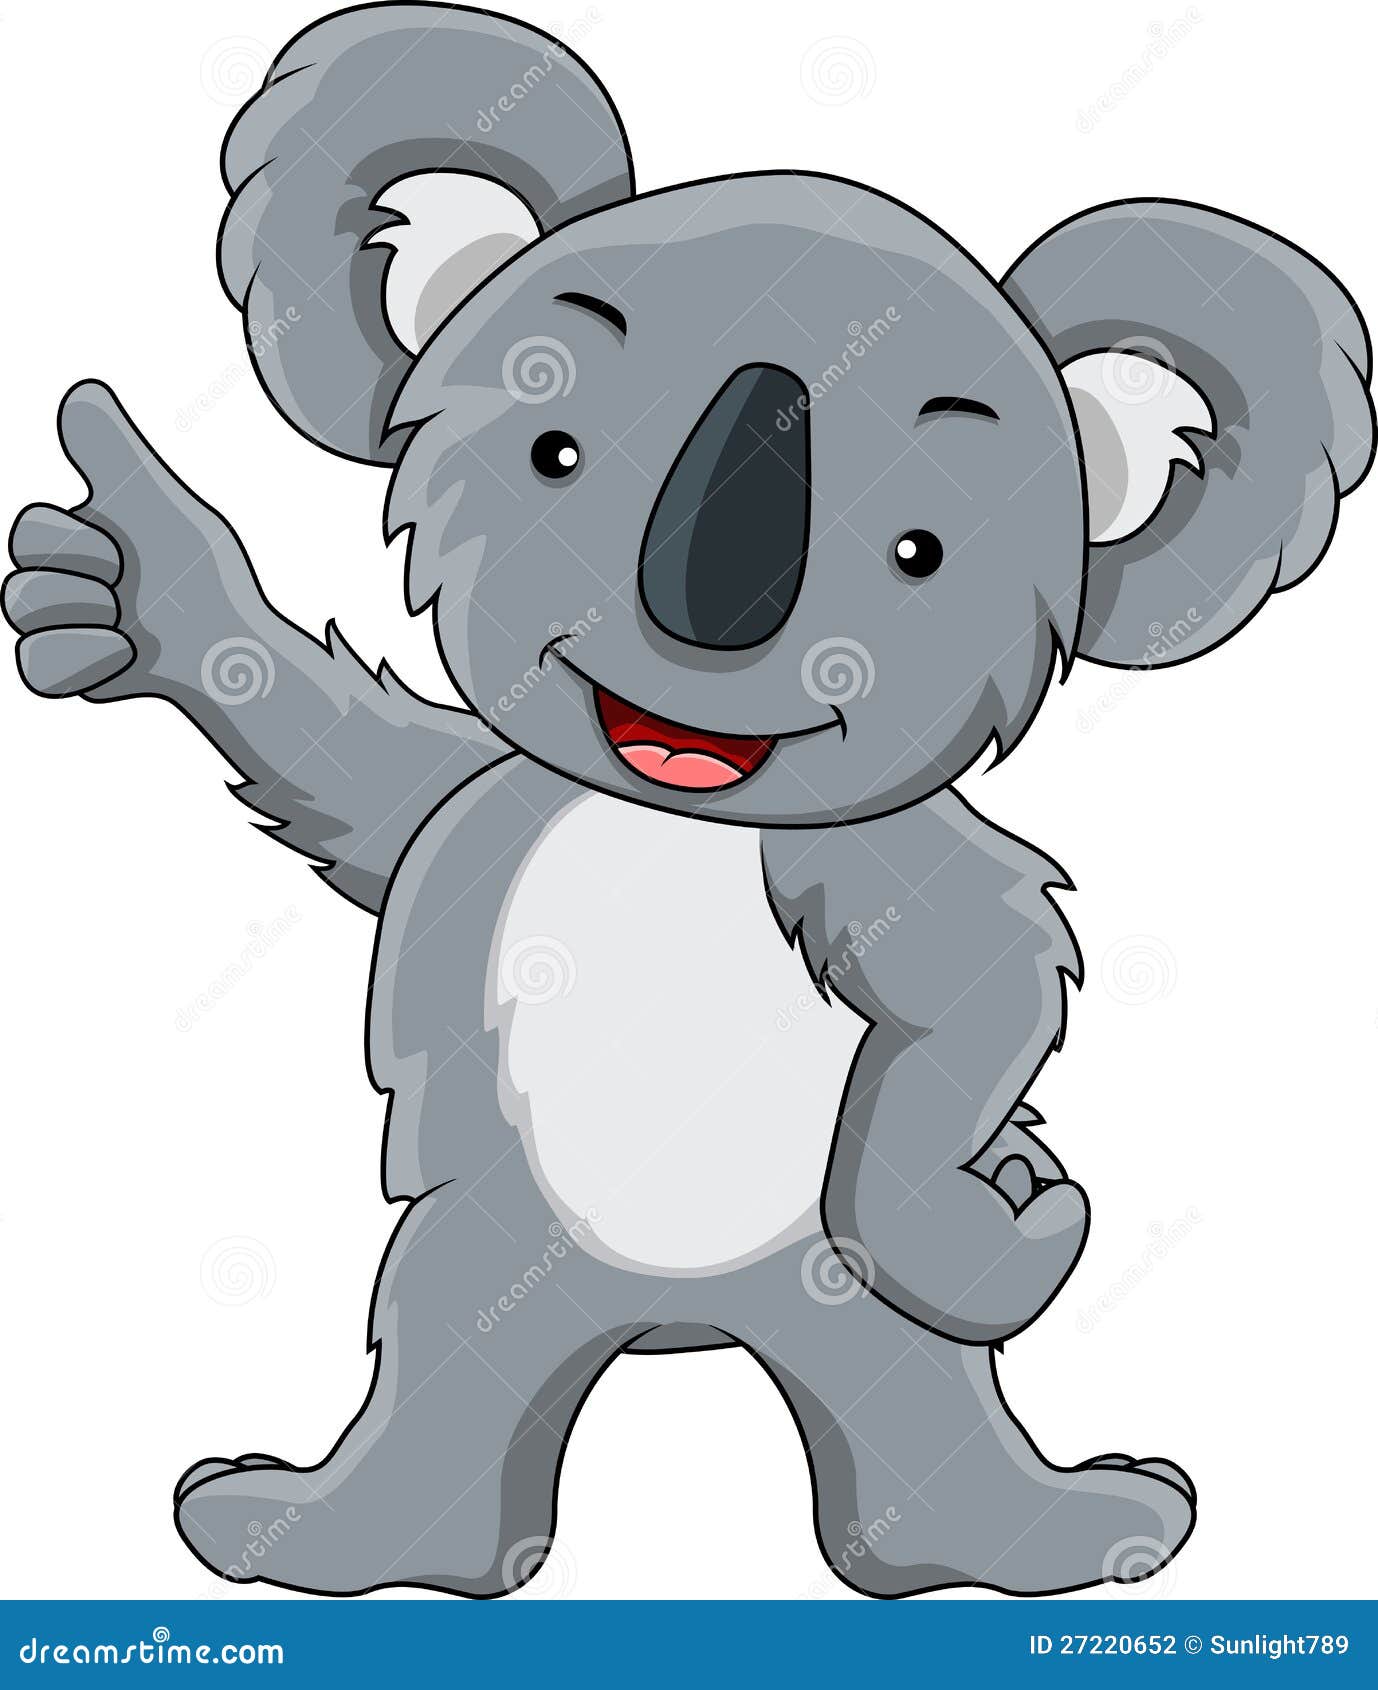 Funny koala cartoon stock illustration. Illustration of fauna - 27220652